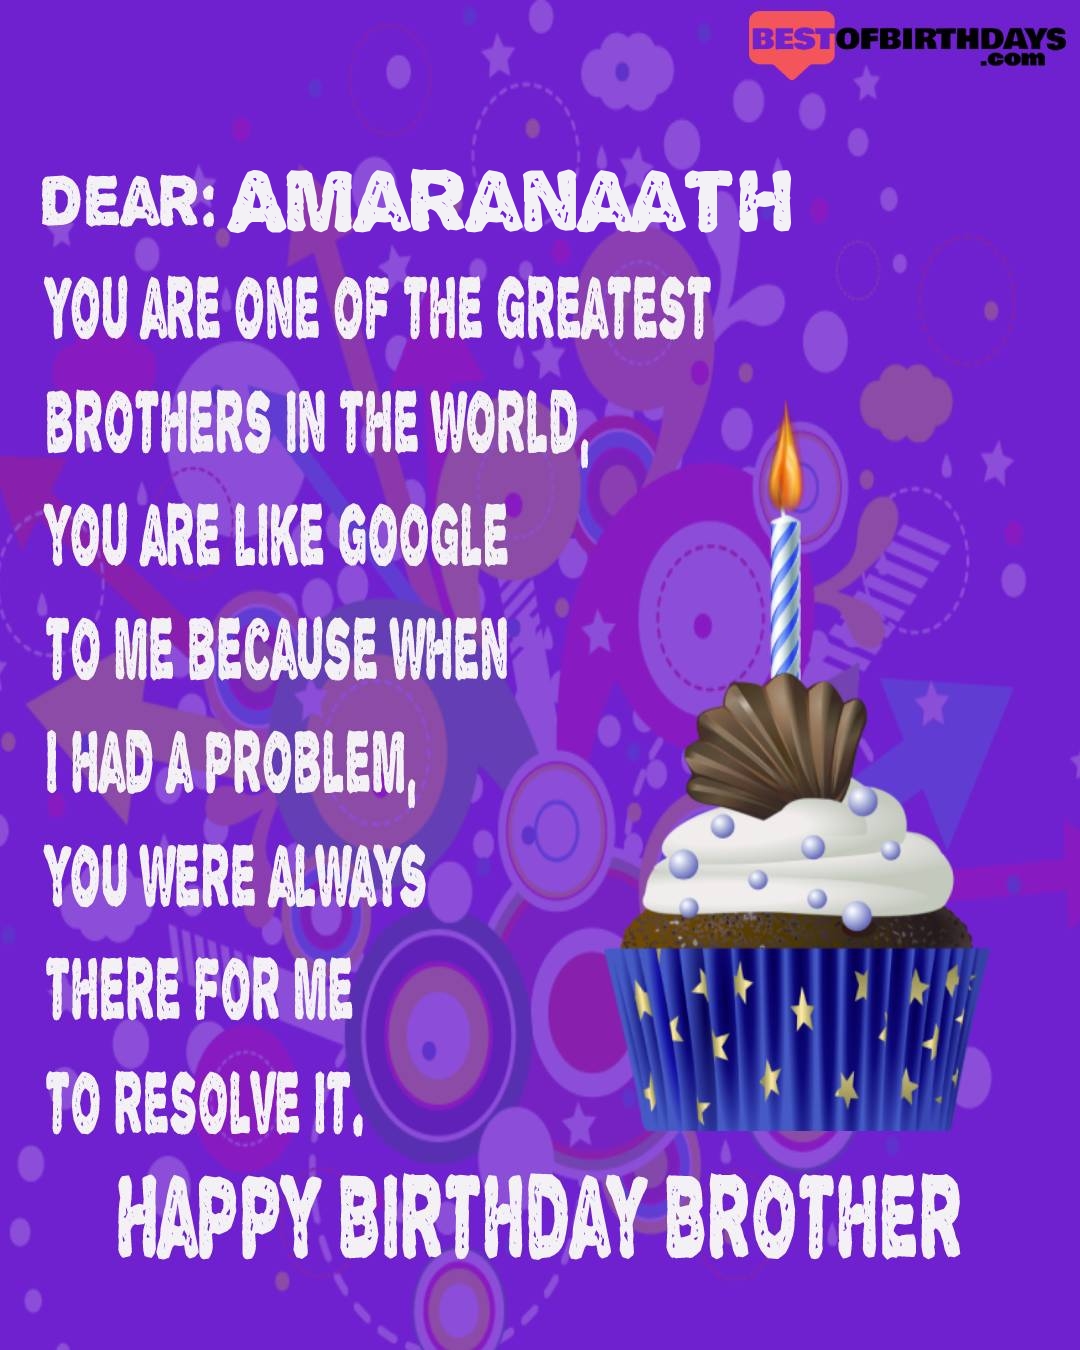 Happy birthday amaranaath bhai brother bro